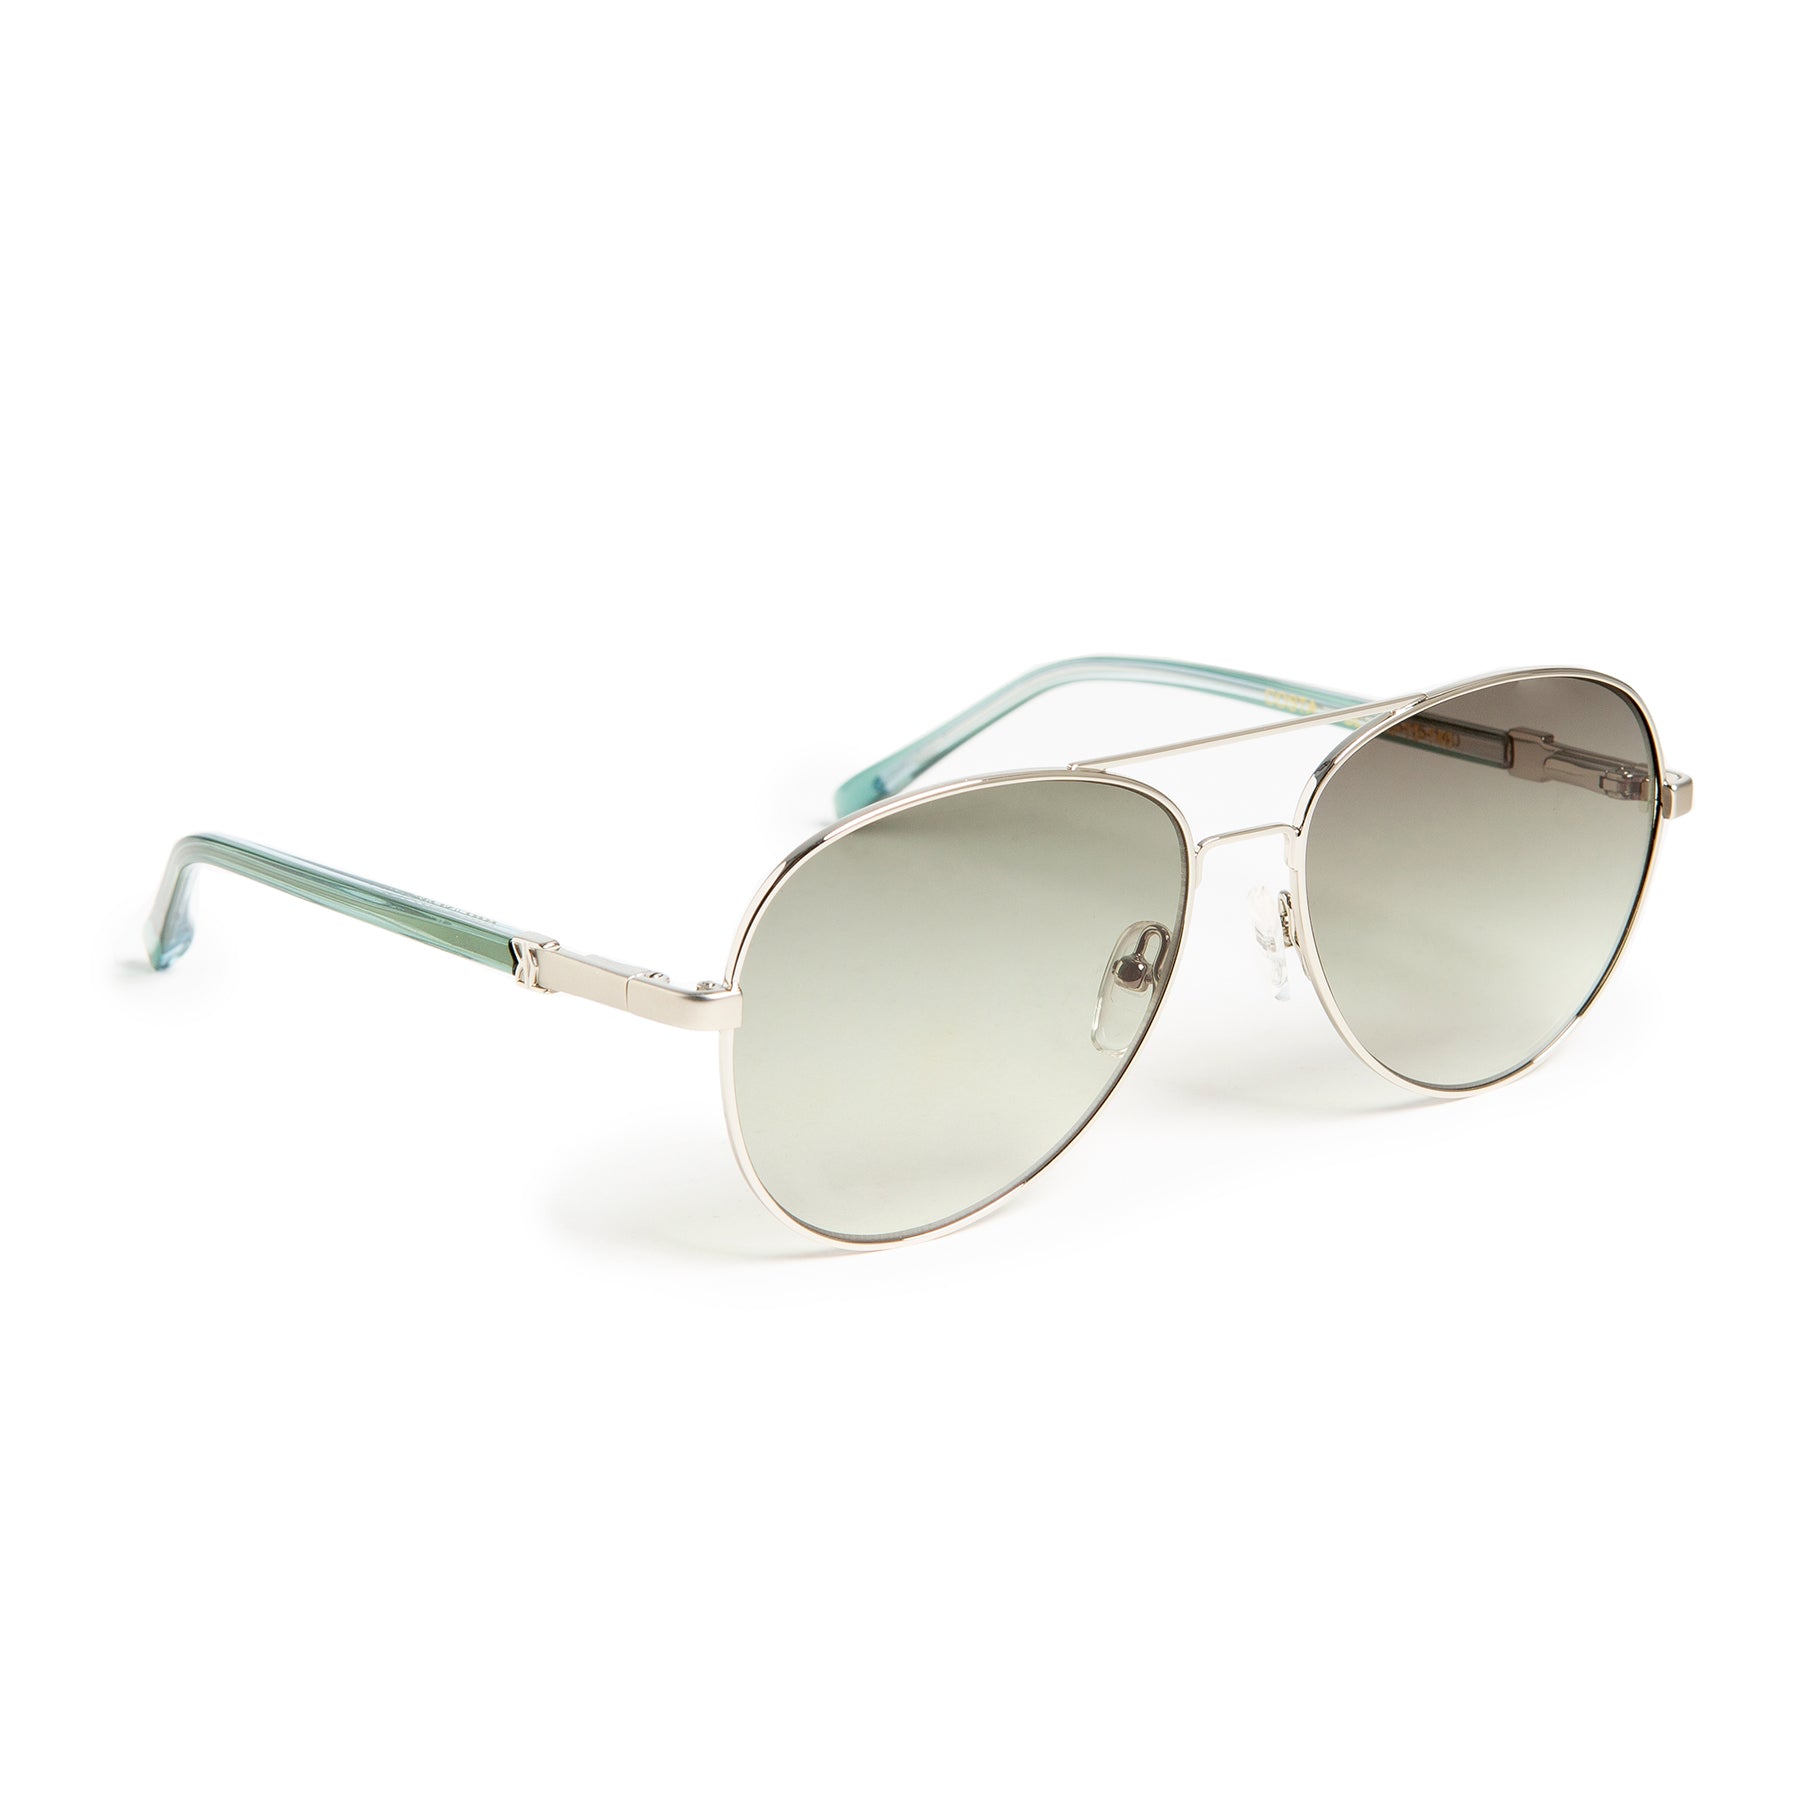 Image of Costa Aviator Sunglasses - Silver